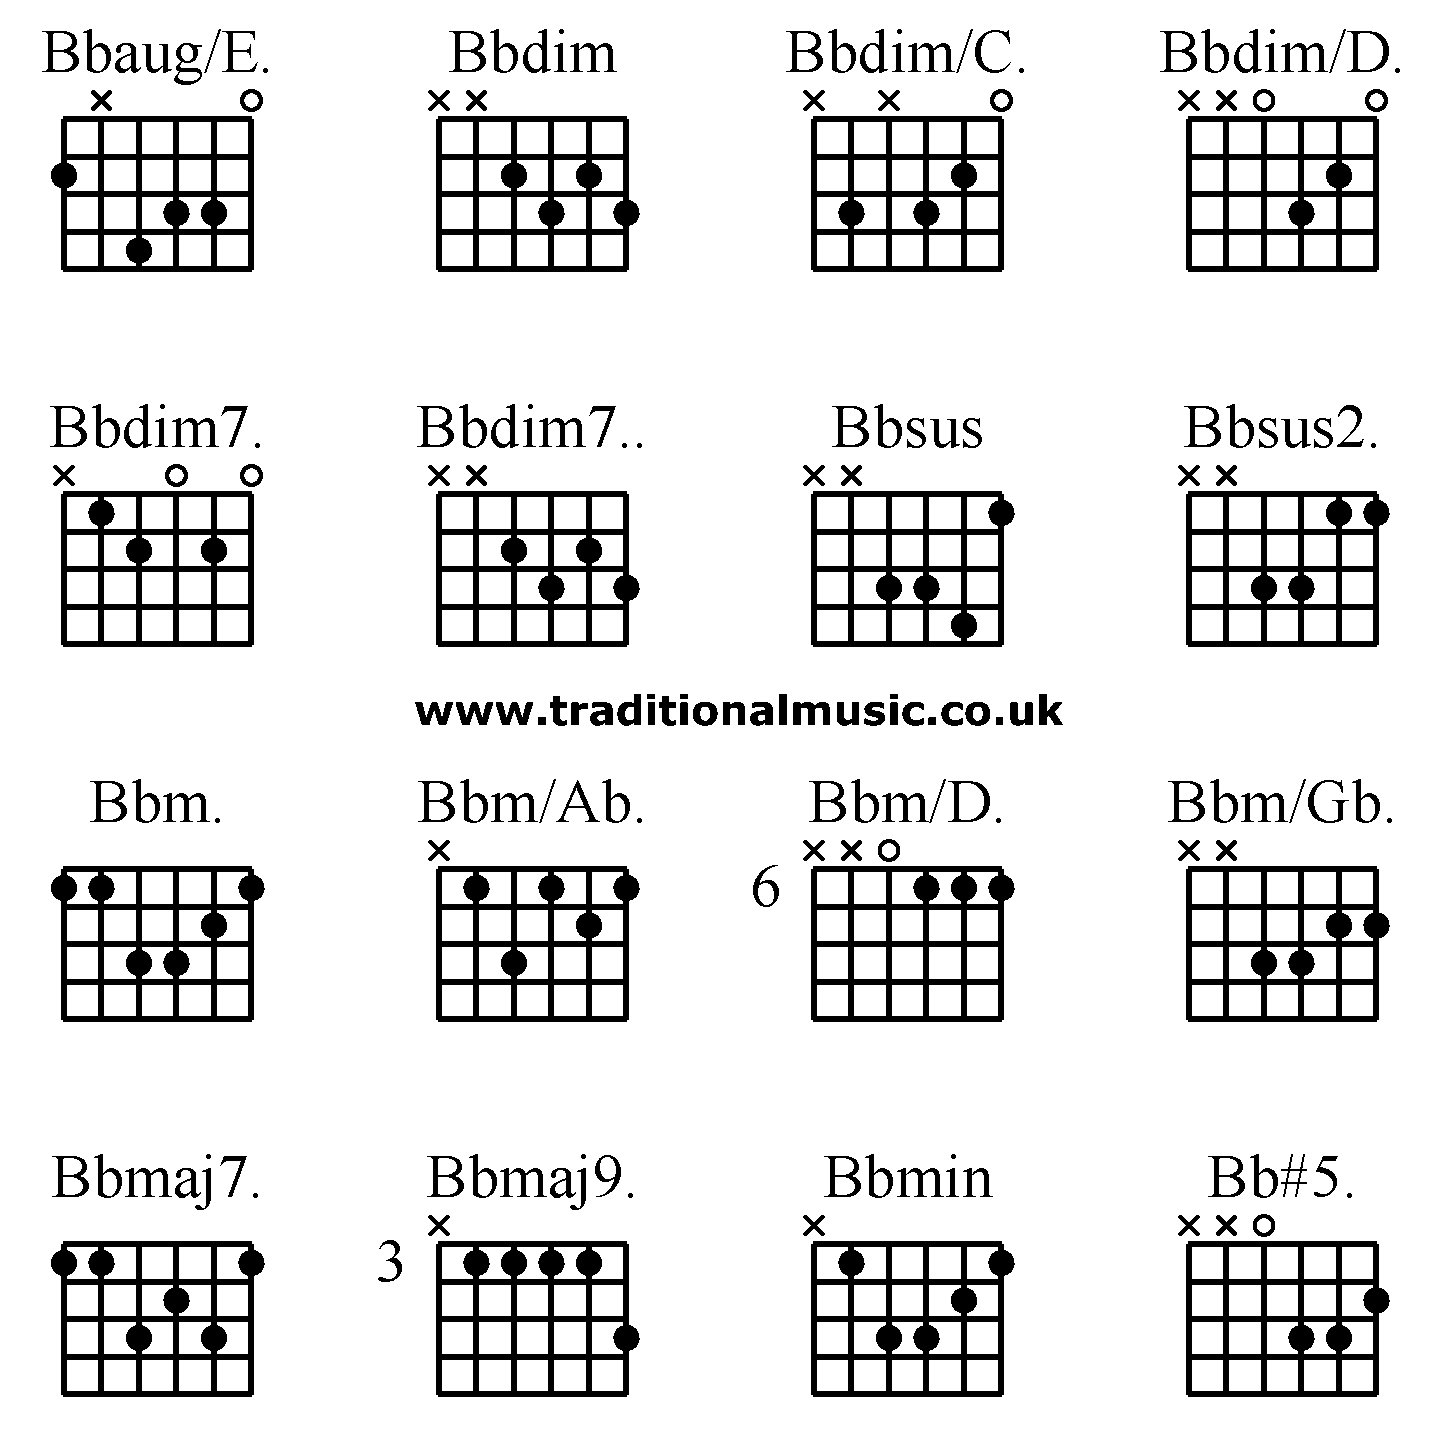 Advanced guitar chords:Bbaug/E. Bbdim Bbdim/C. Bbdim/D. Bbdim7. Bbdim7.. Bbsus Bbsus2. Bbm. Bbm/Ab. Bbm/D. Bbm/Gb. Bbmaj7.Bbmaj9. Bbmin Bb#5.